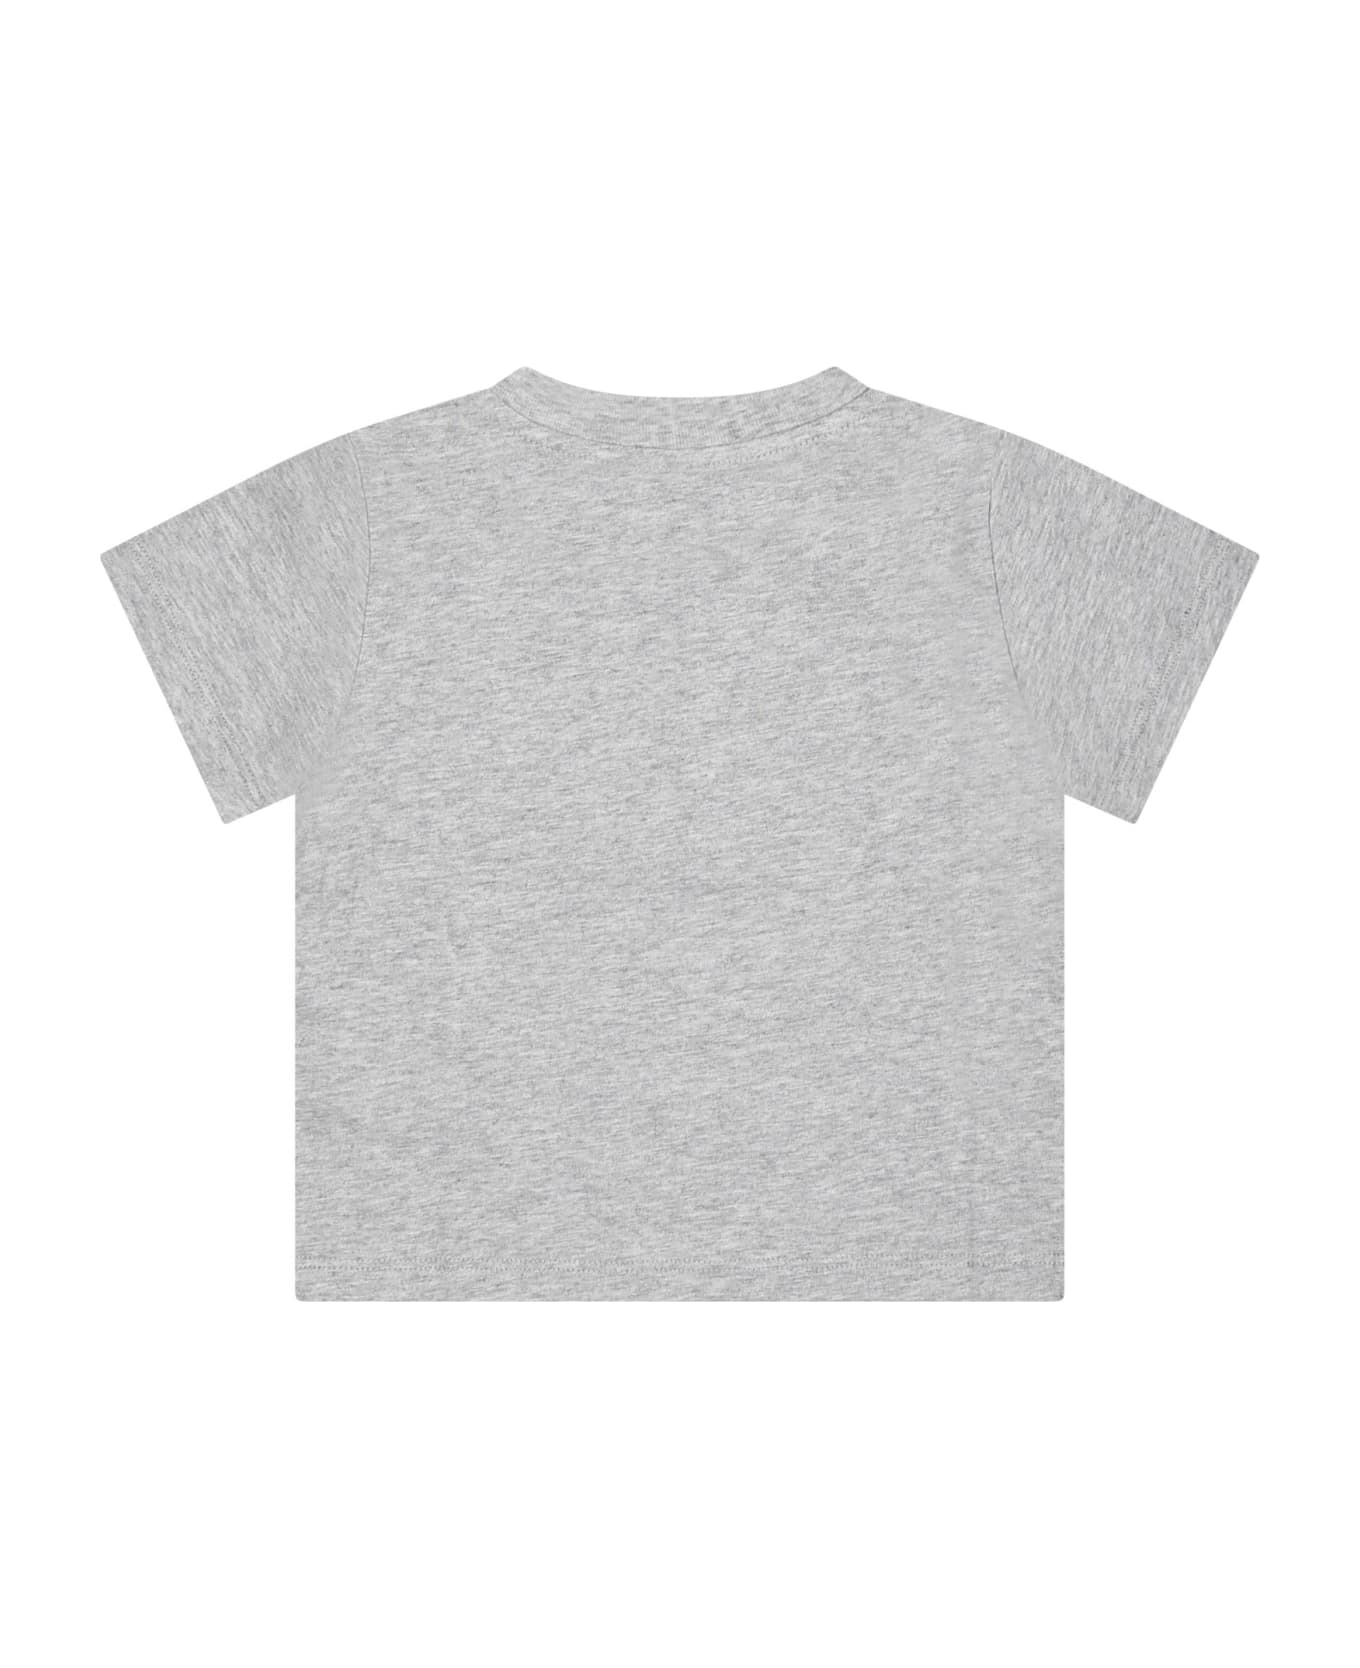 Stella McCartney Kids Gray T-shirt For Baby Boy With Shark Print - Grey